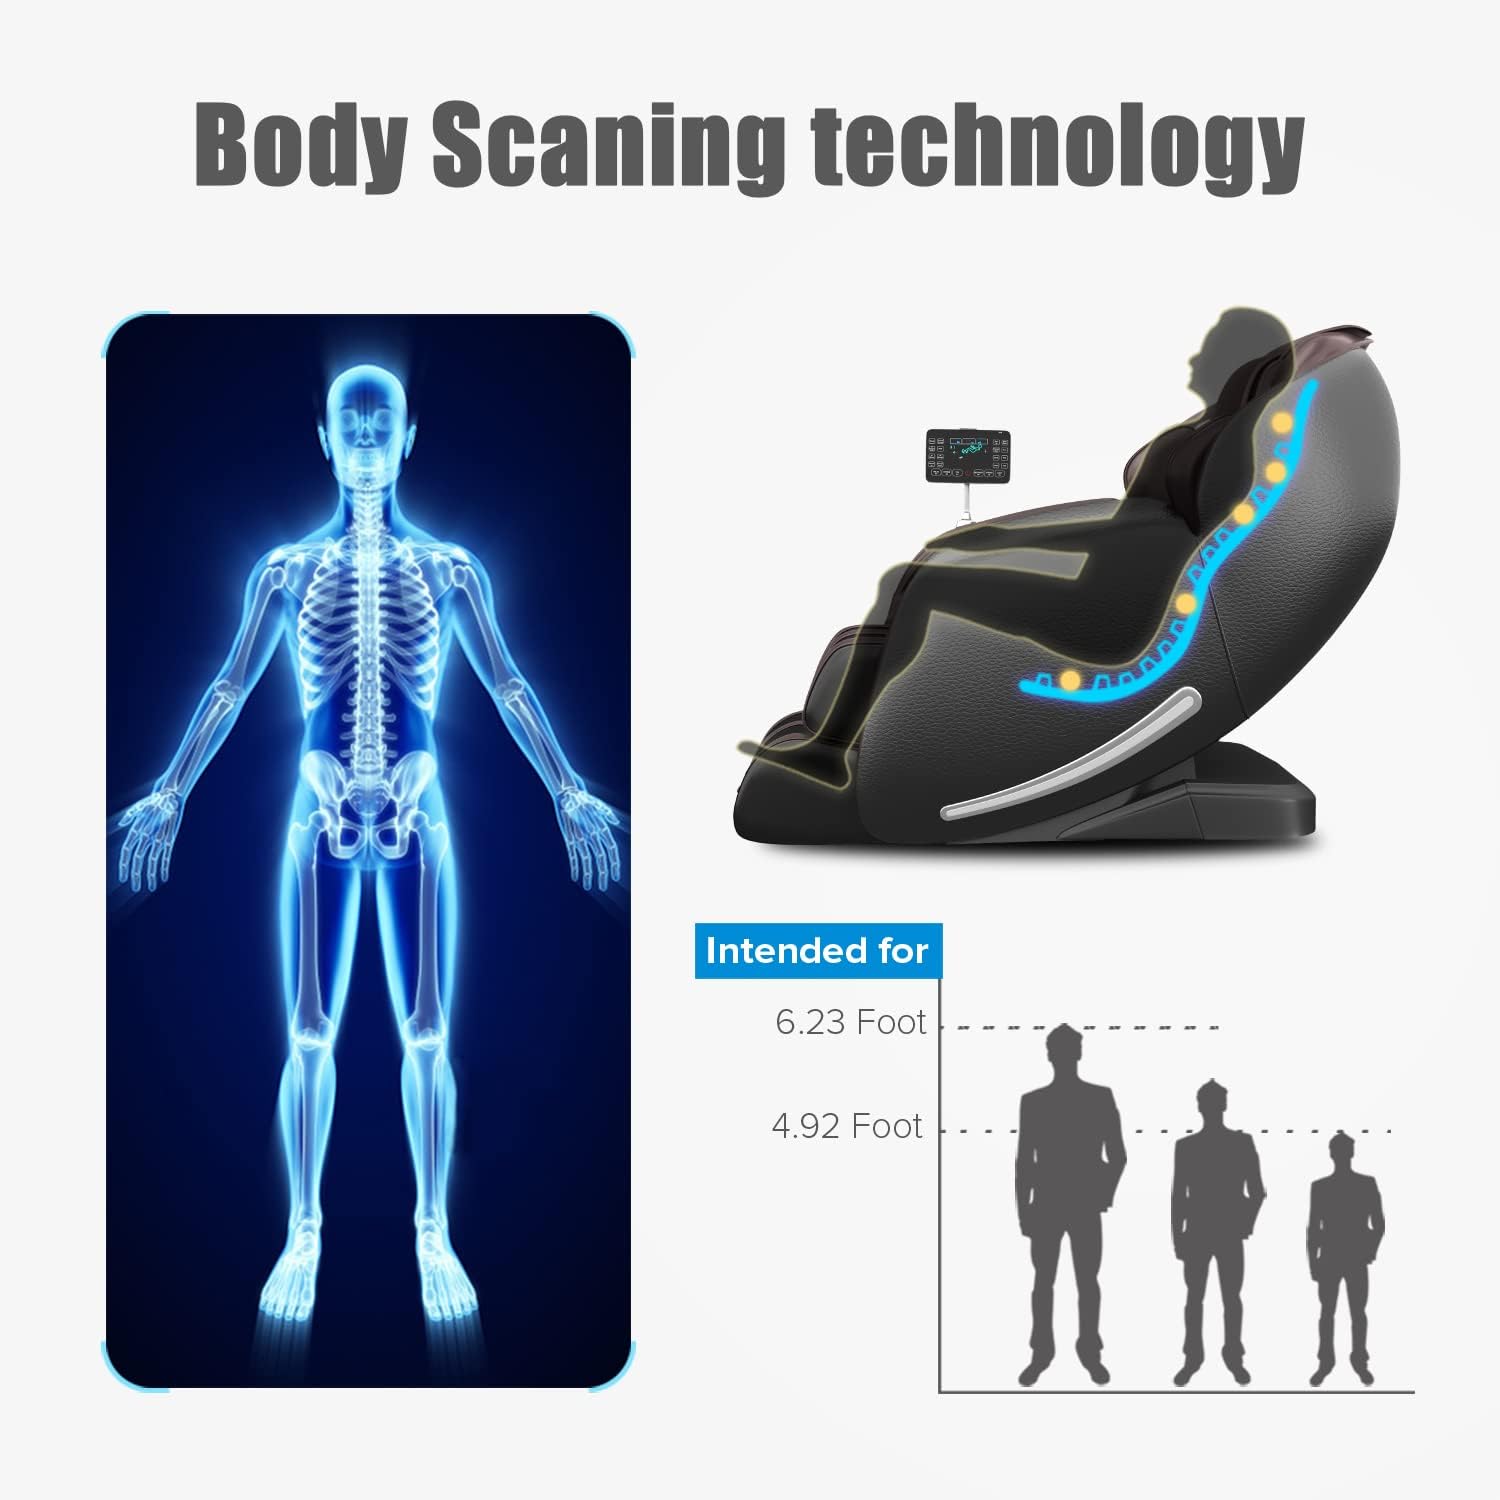 Real Relax  Full Body Zero Gravity SL-Track Shiatsu Massage Recliner Chair (Brown) - $1275